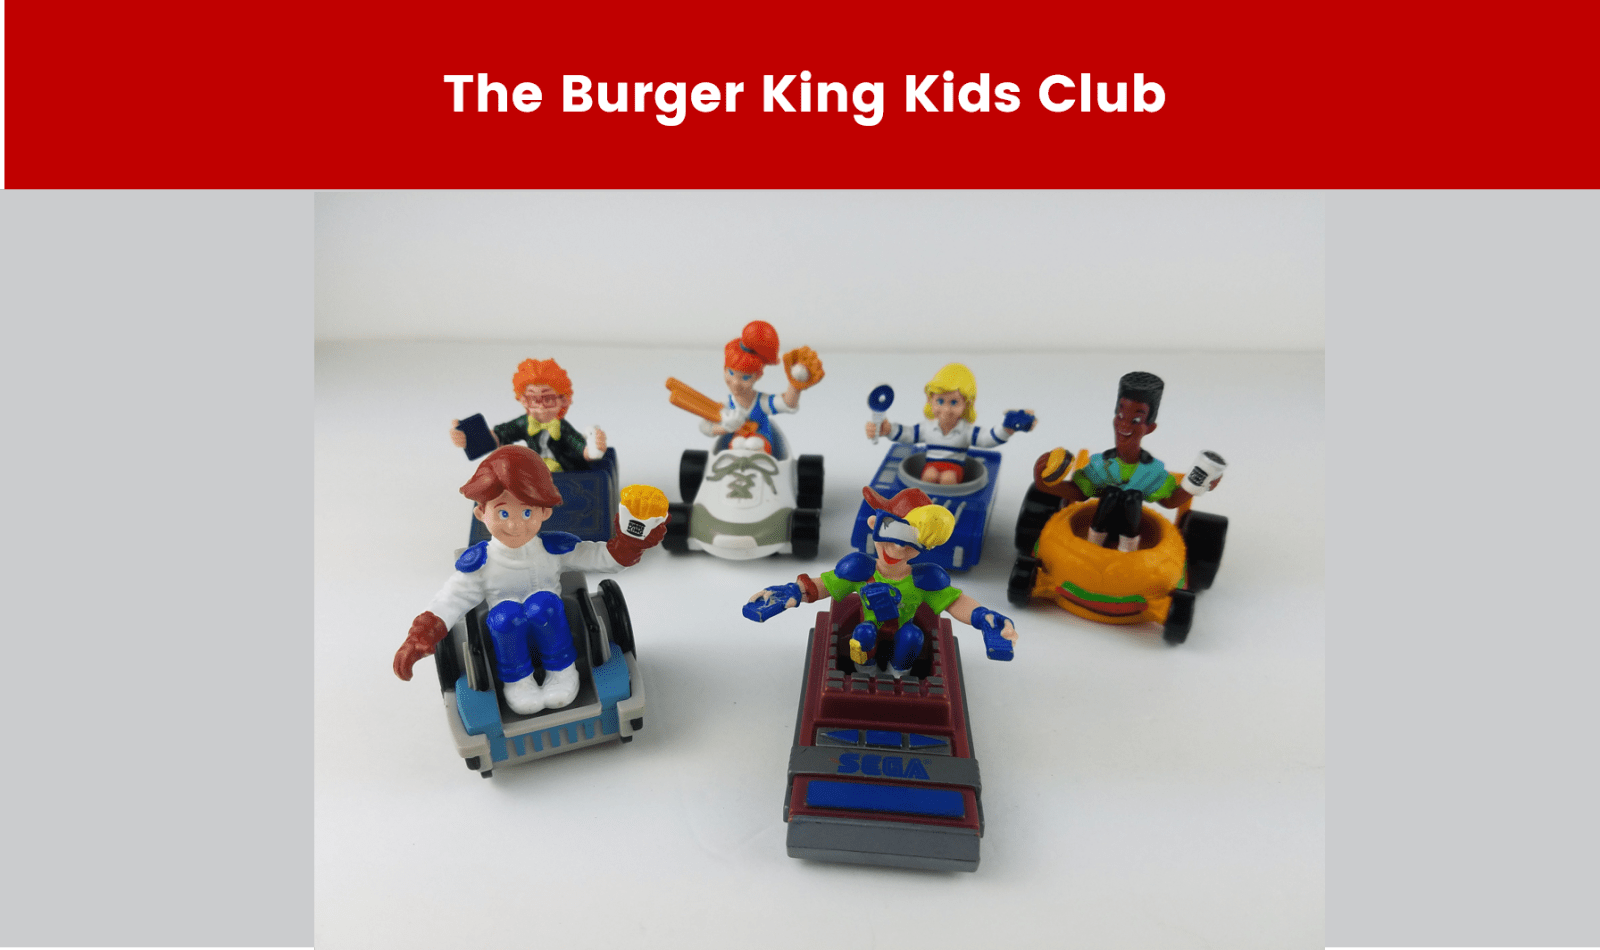 The Burger King Kids Club
